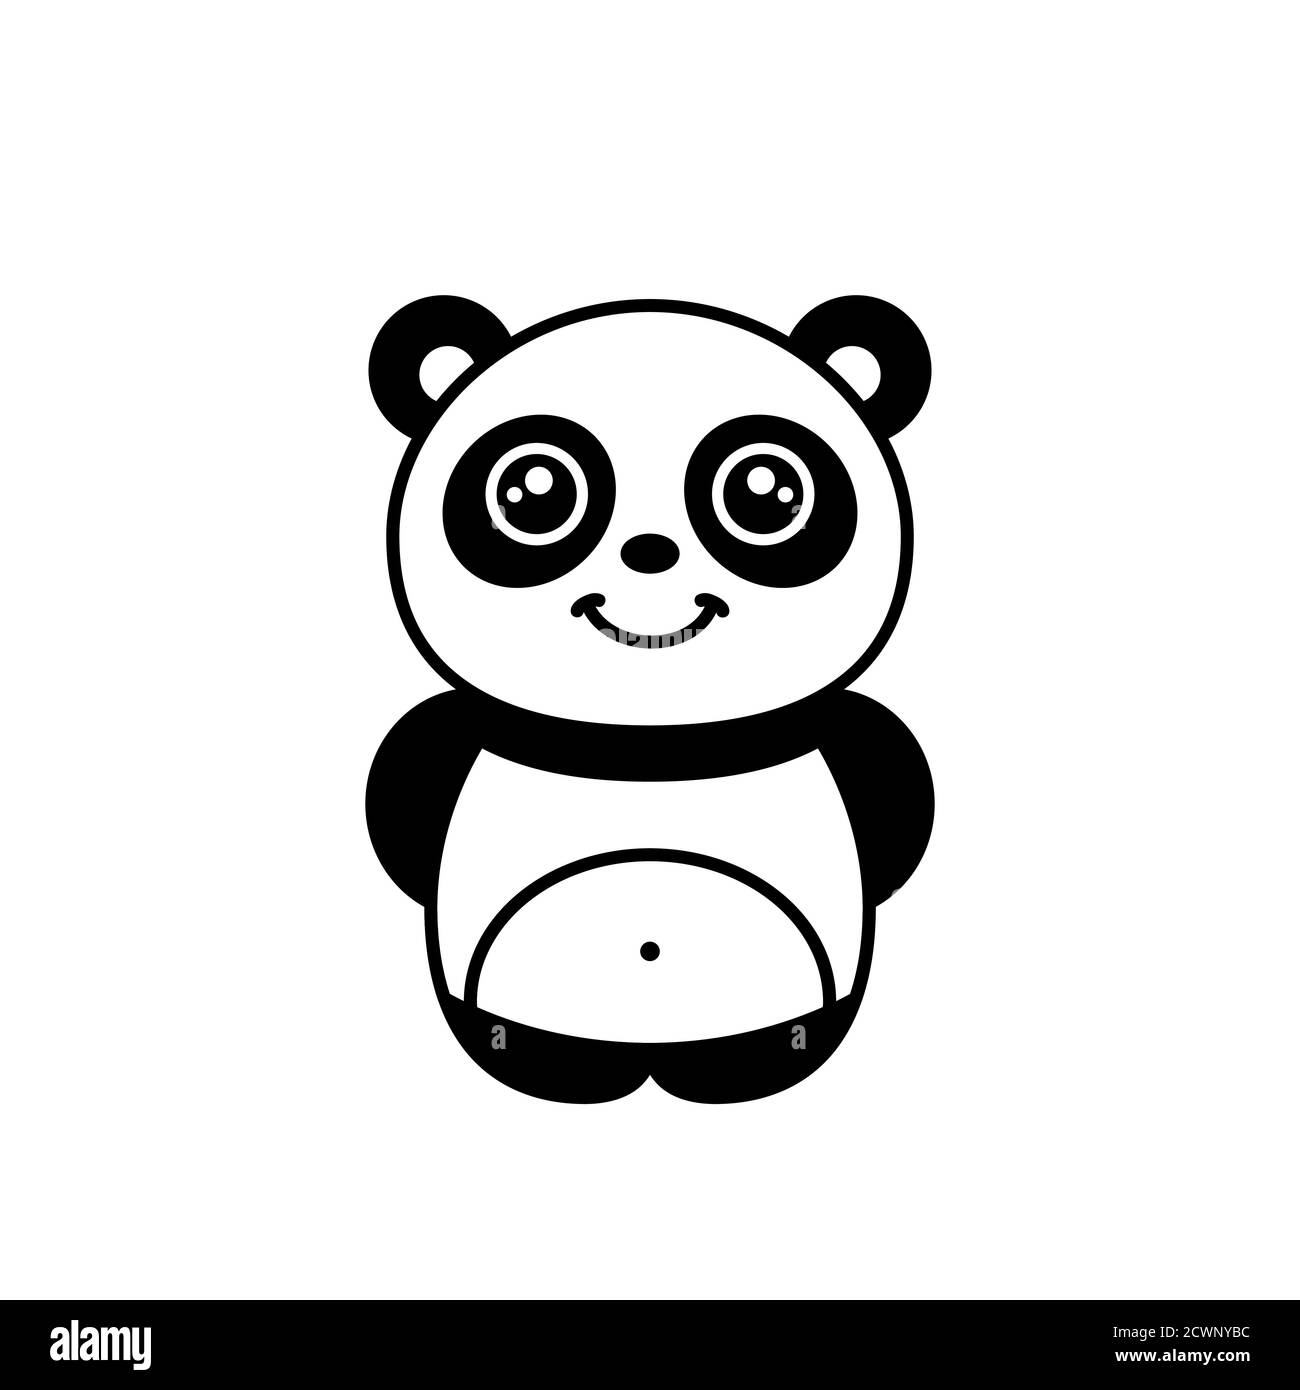 Panda bear Black and White Stock Photos & Images - Alamy